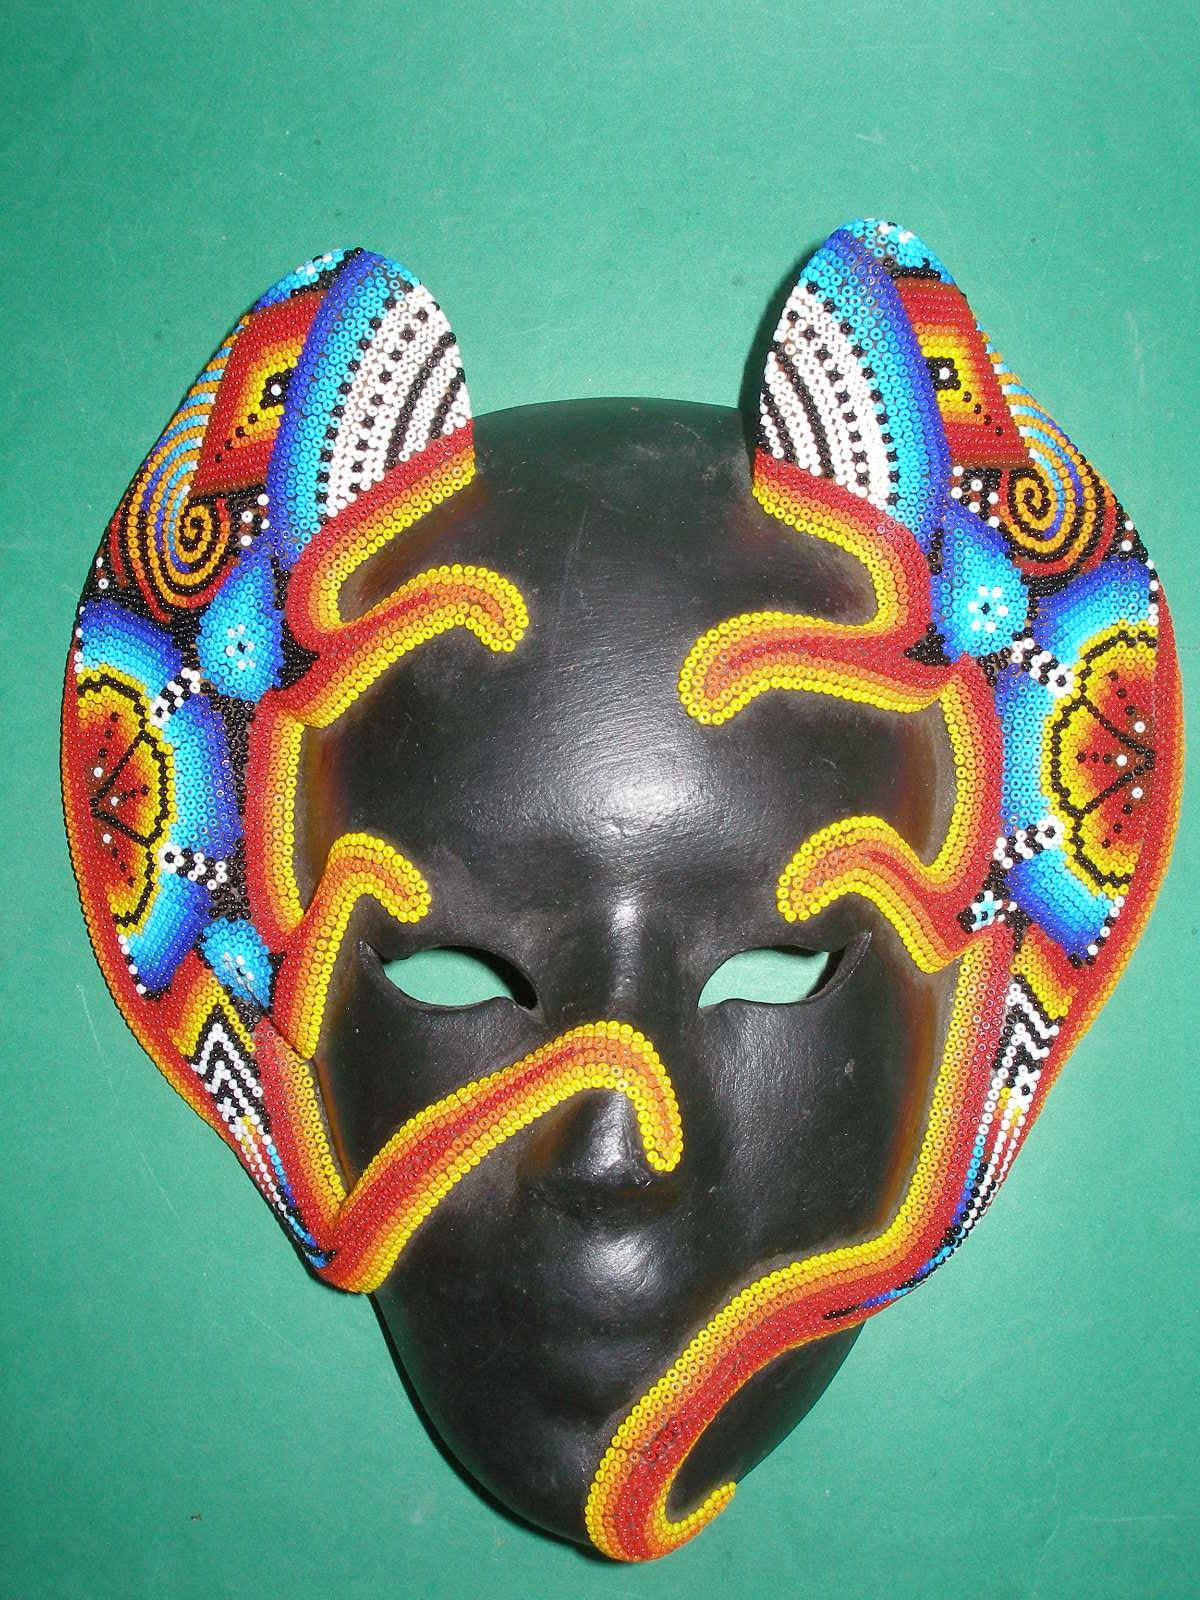 Huichol Mask with 2 Iguanas | Mexican resto ideas | Pinterest ...